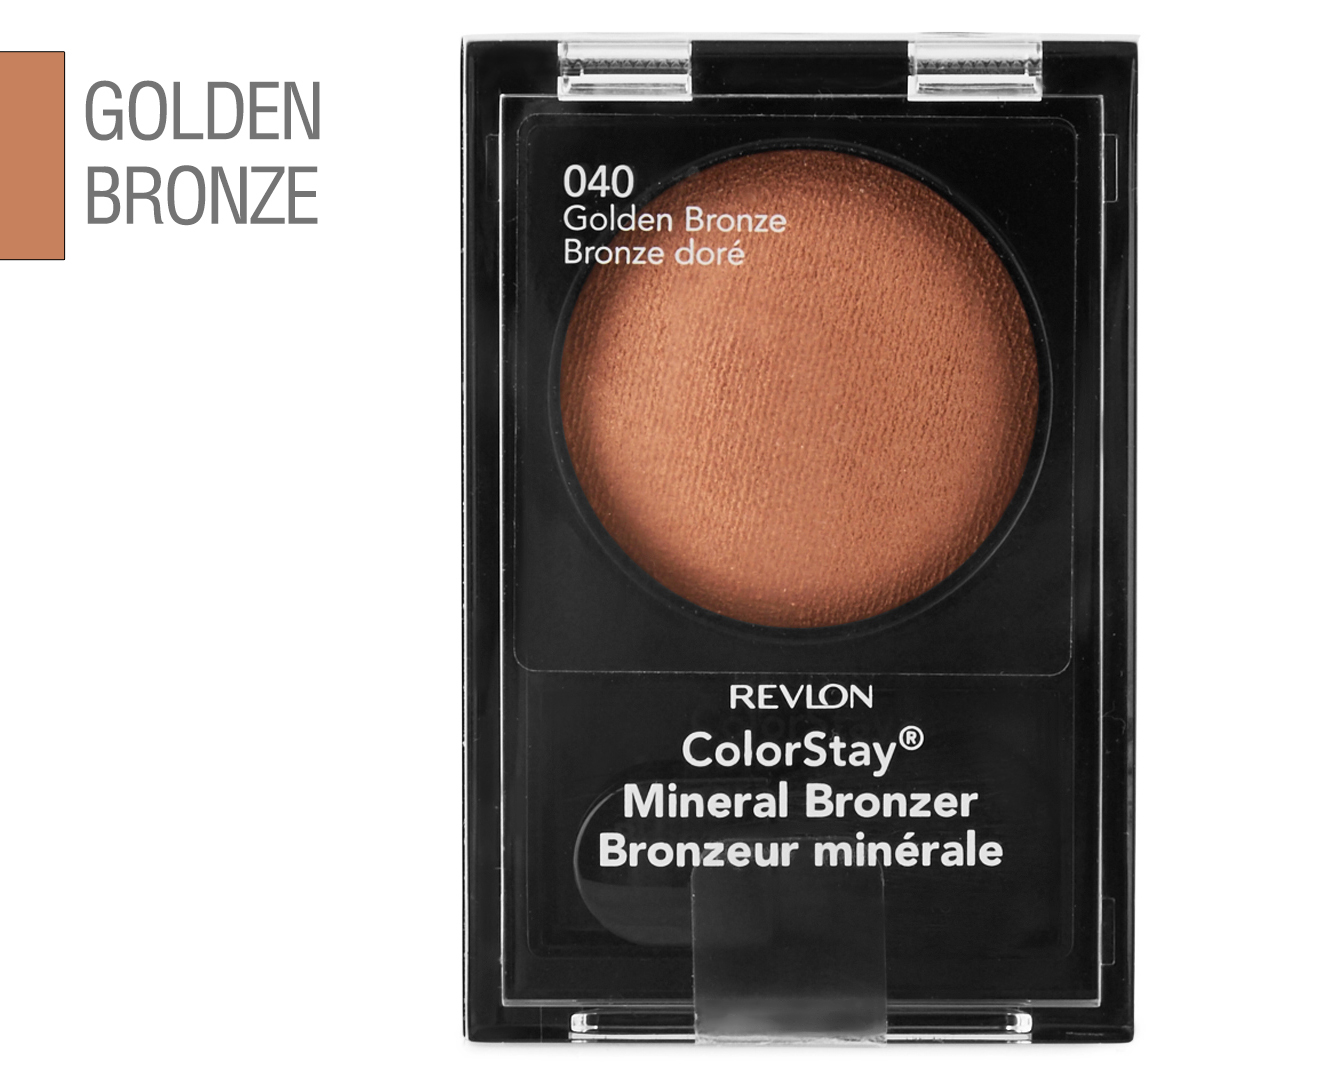 Revlon ColorStay Mineral Bronzer - #040 Golden Bronze